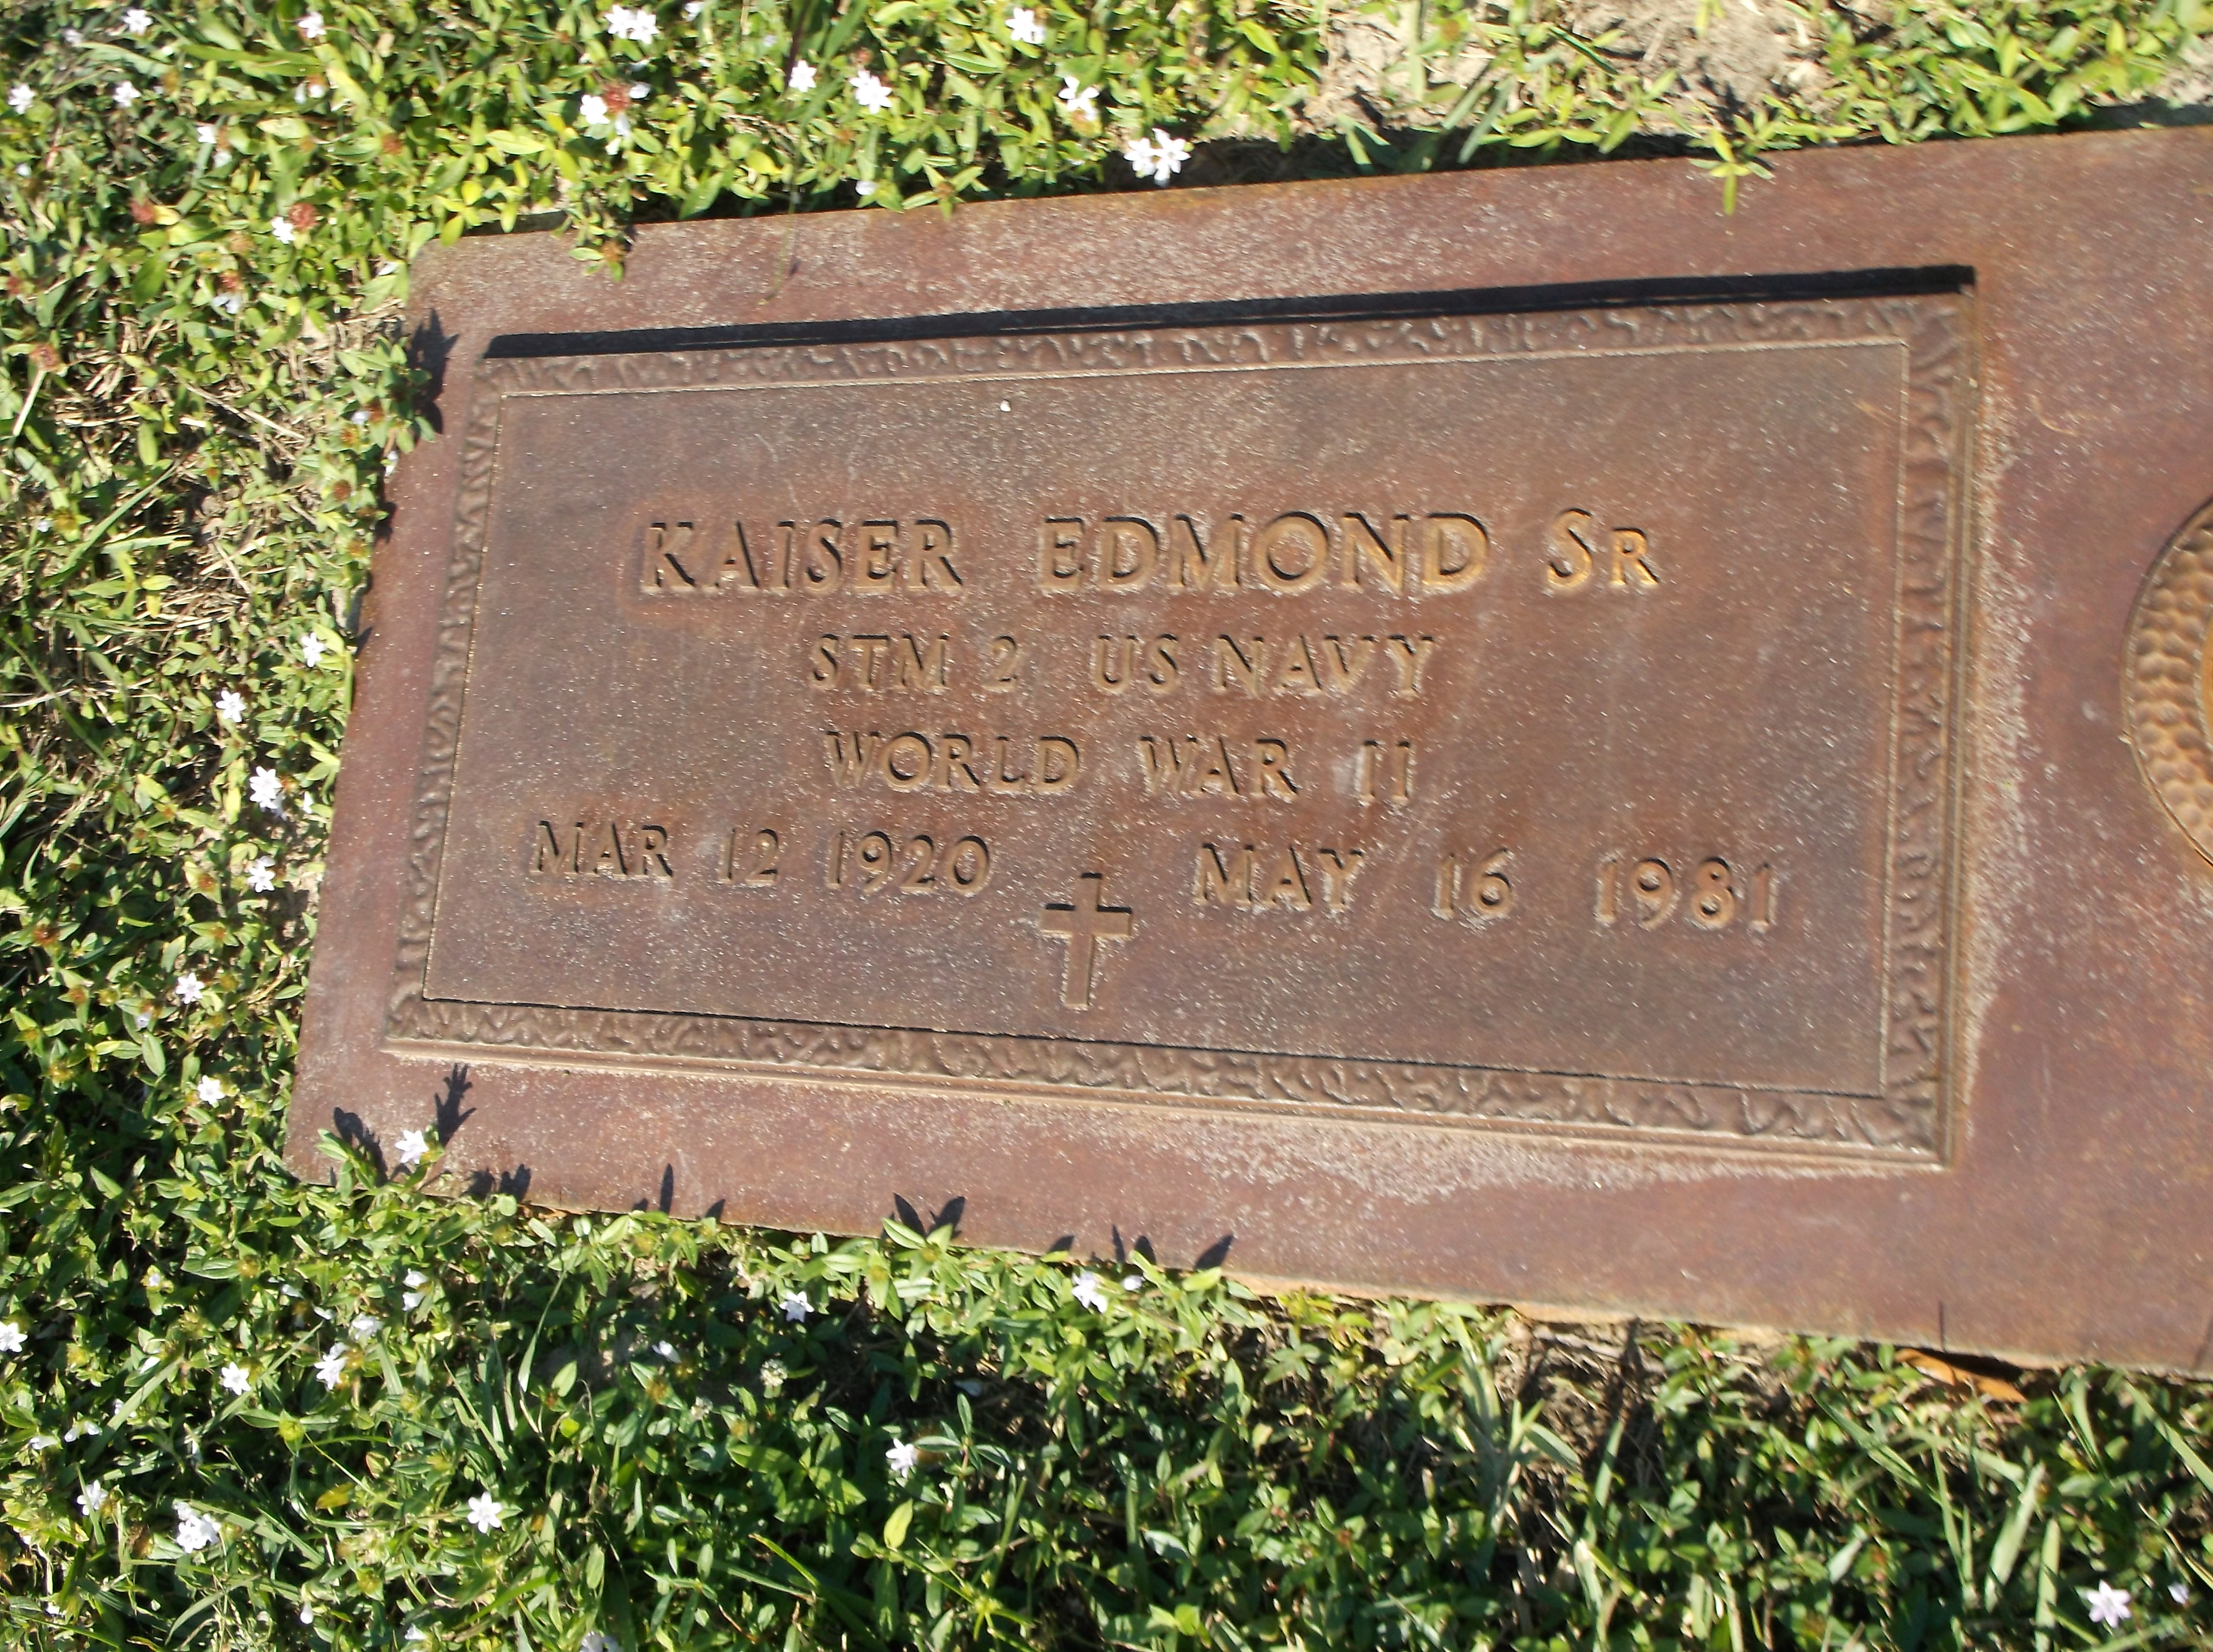 Kaiser Edmond, Sr